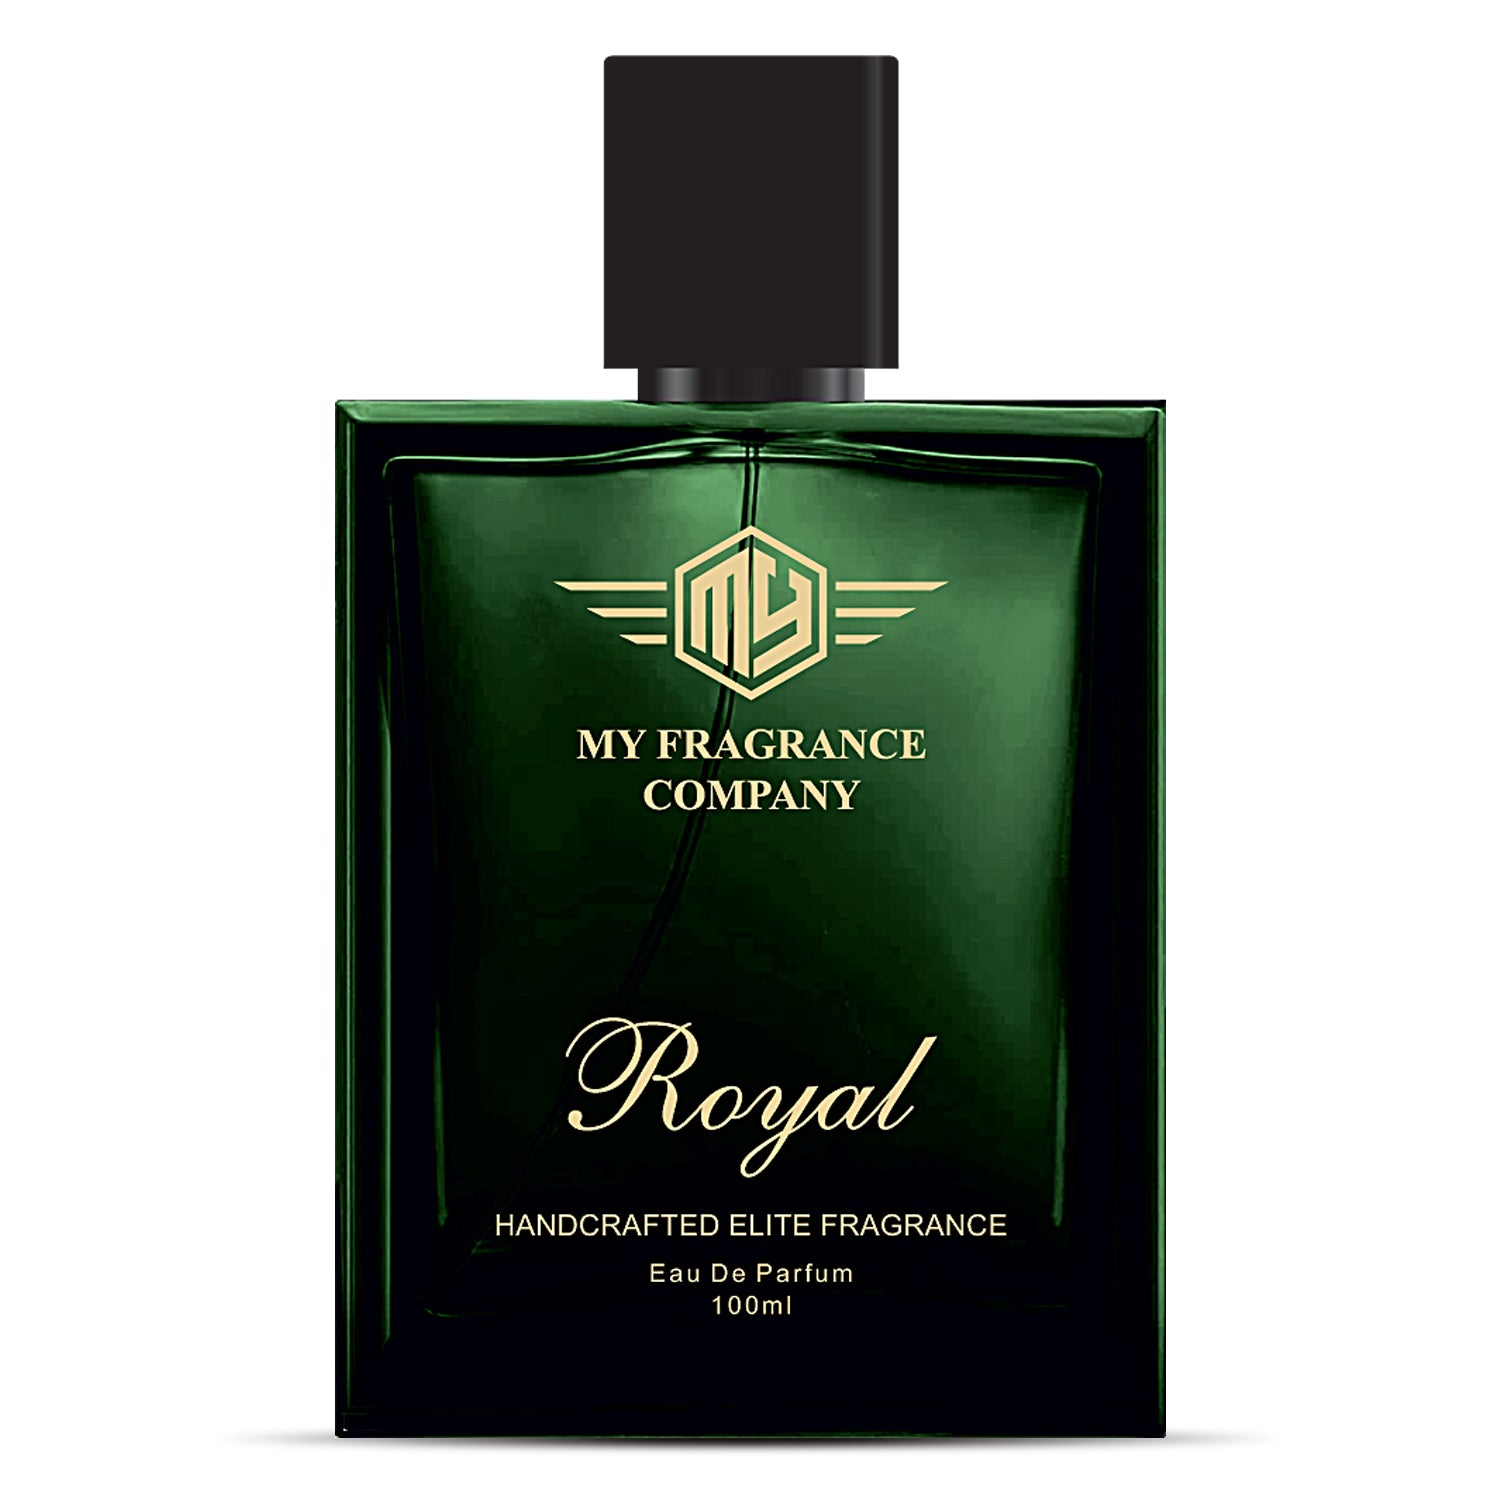 Buy My Fragrance Company Hydra Handcrafted Elite Fragrance EDP